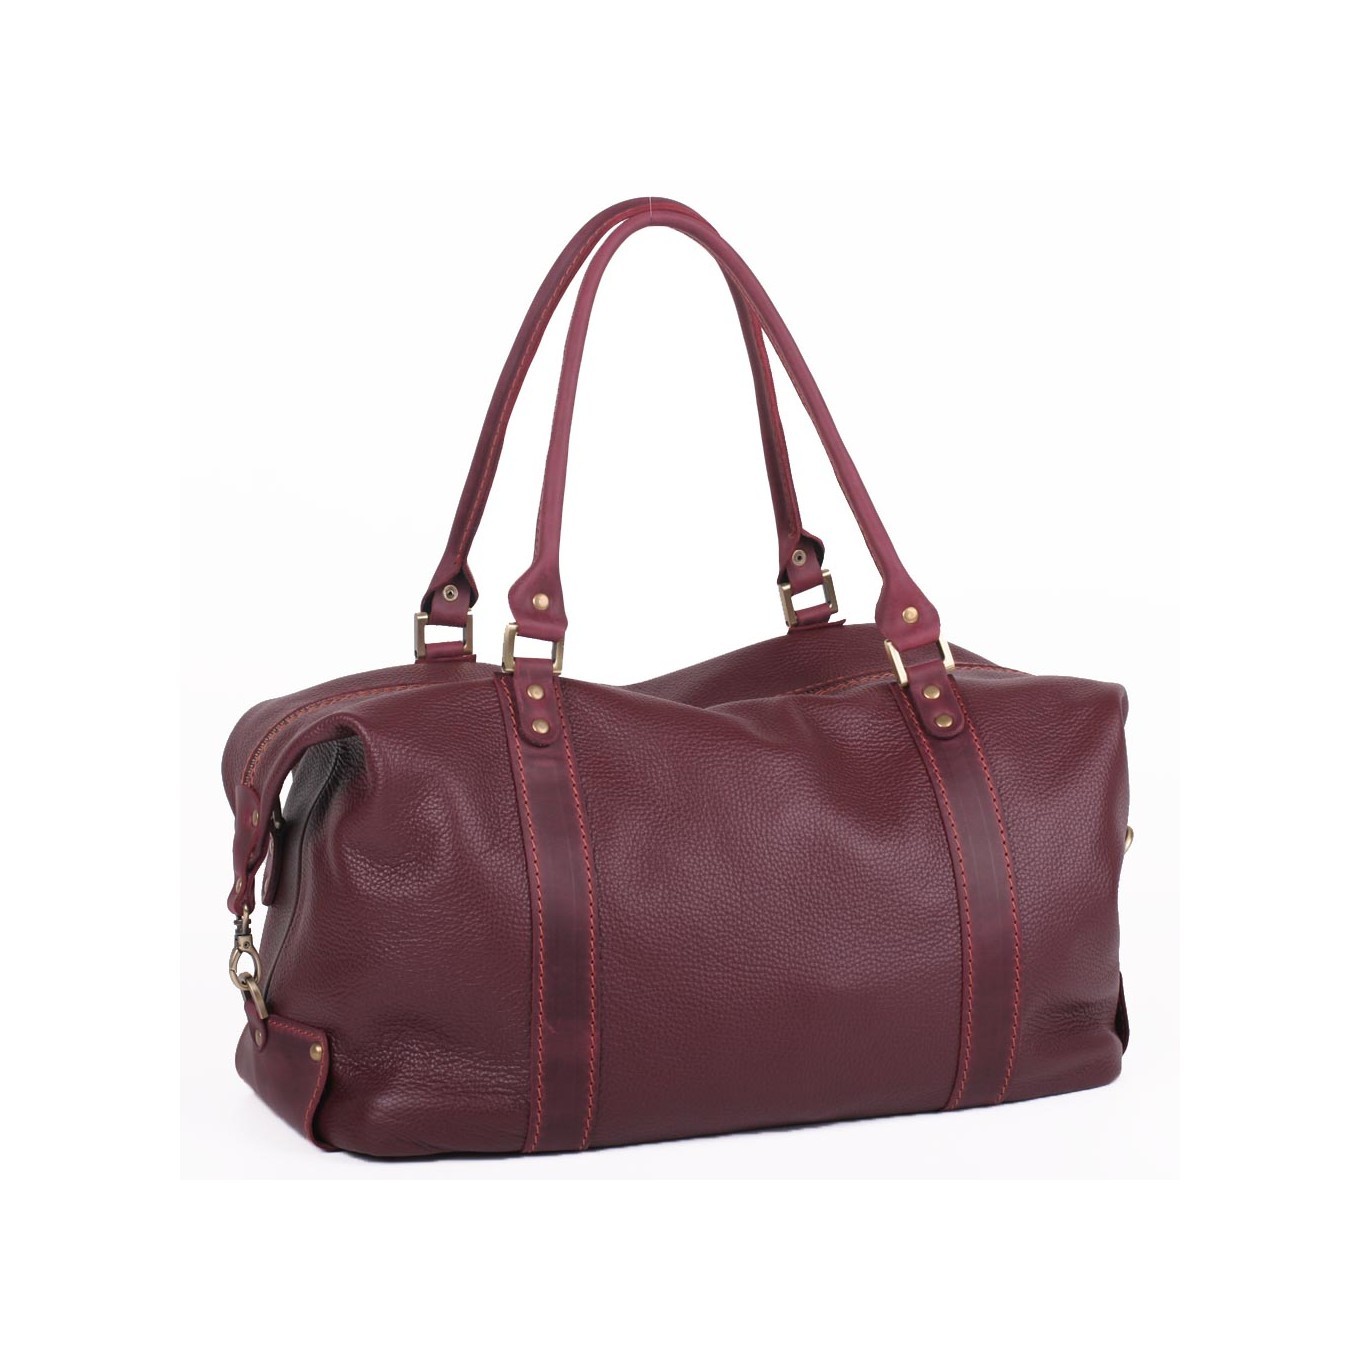 Women's burgundy carpetbag made of high-quality genuine leather